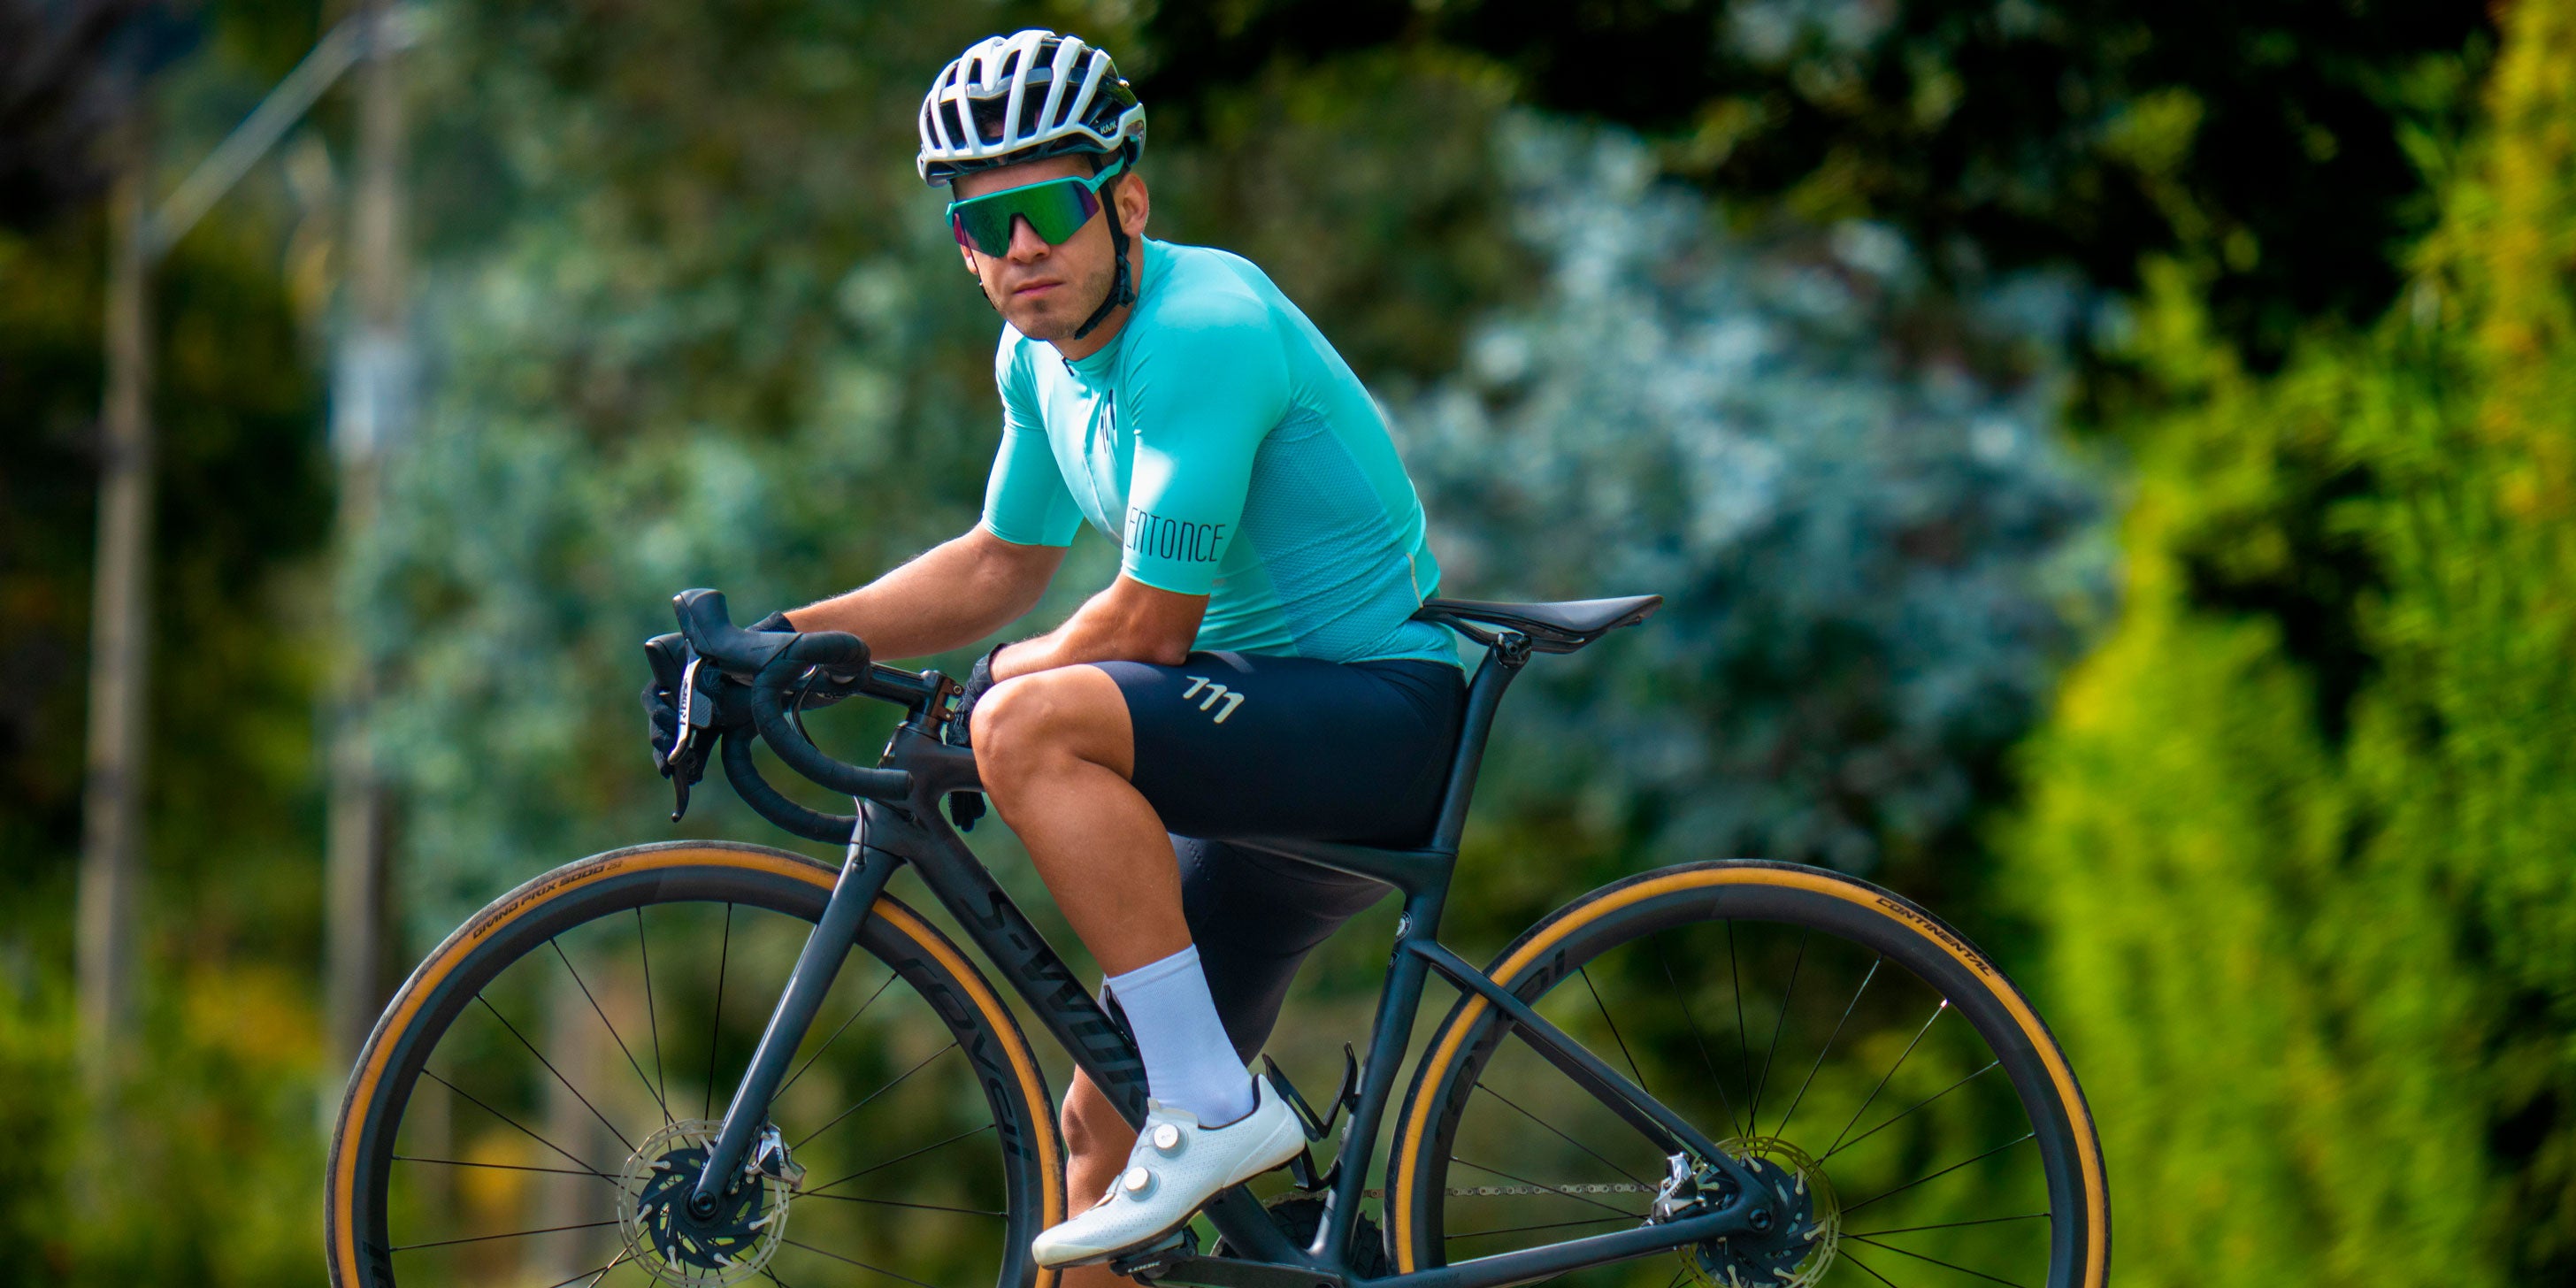 Guantes De Hombre Mujer Para Bicicleta Accesorios Deportivos De Deporte  Ciclismo